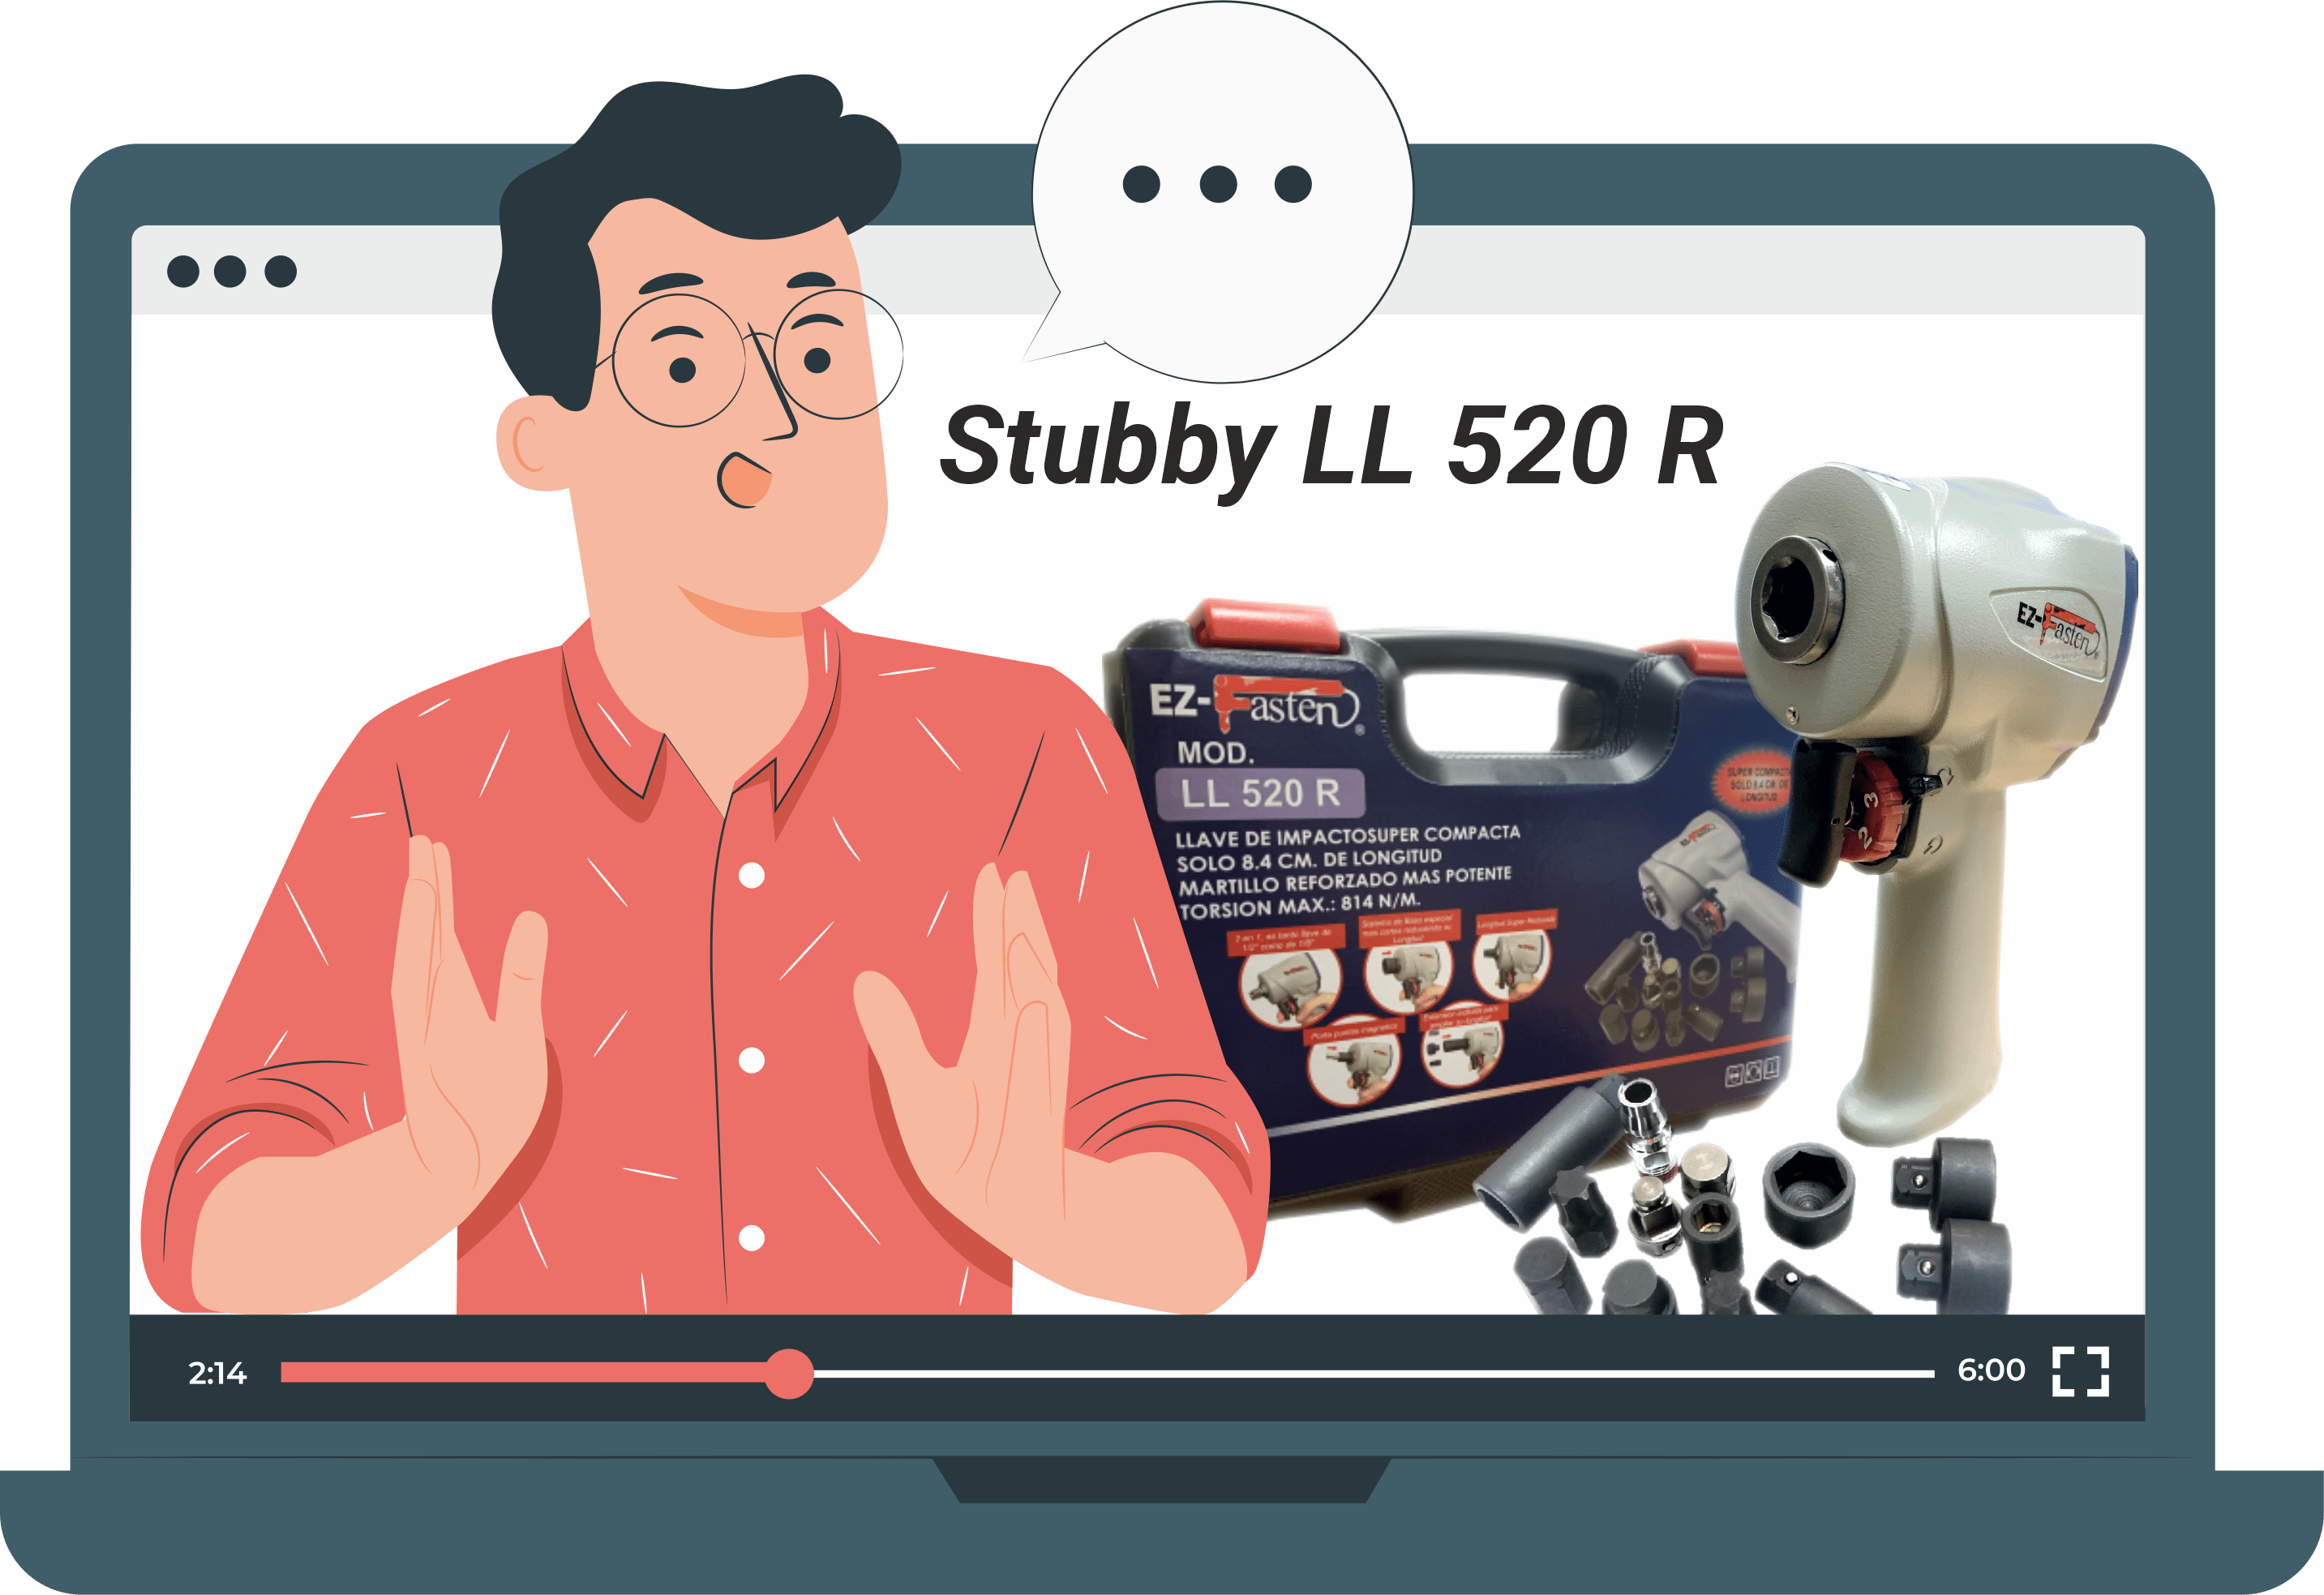 Stubby LL 520 R